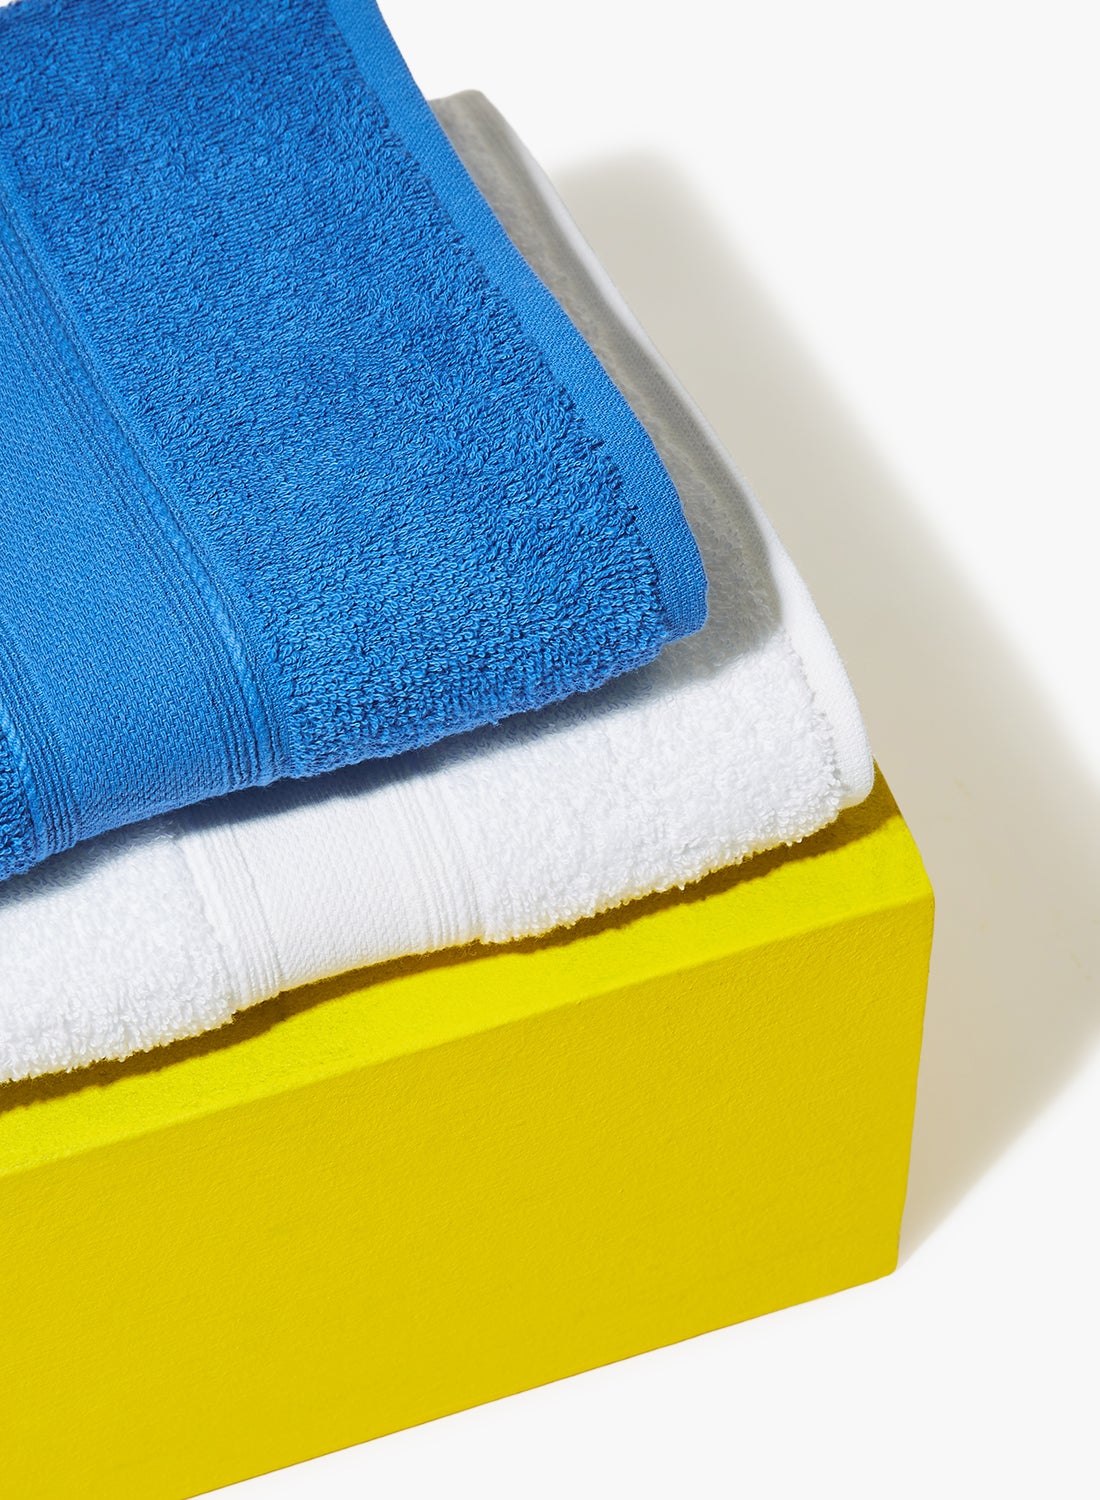 4 Piece Bathroom Towel Set - 400 GSM 100% Cotton Terry - 4 Bath Towel - Blue Color -Quick Dry - Super Absorbent 